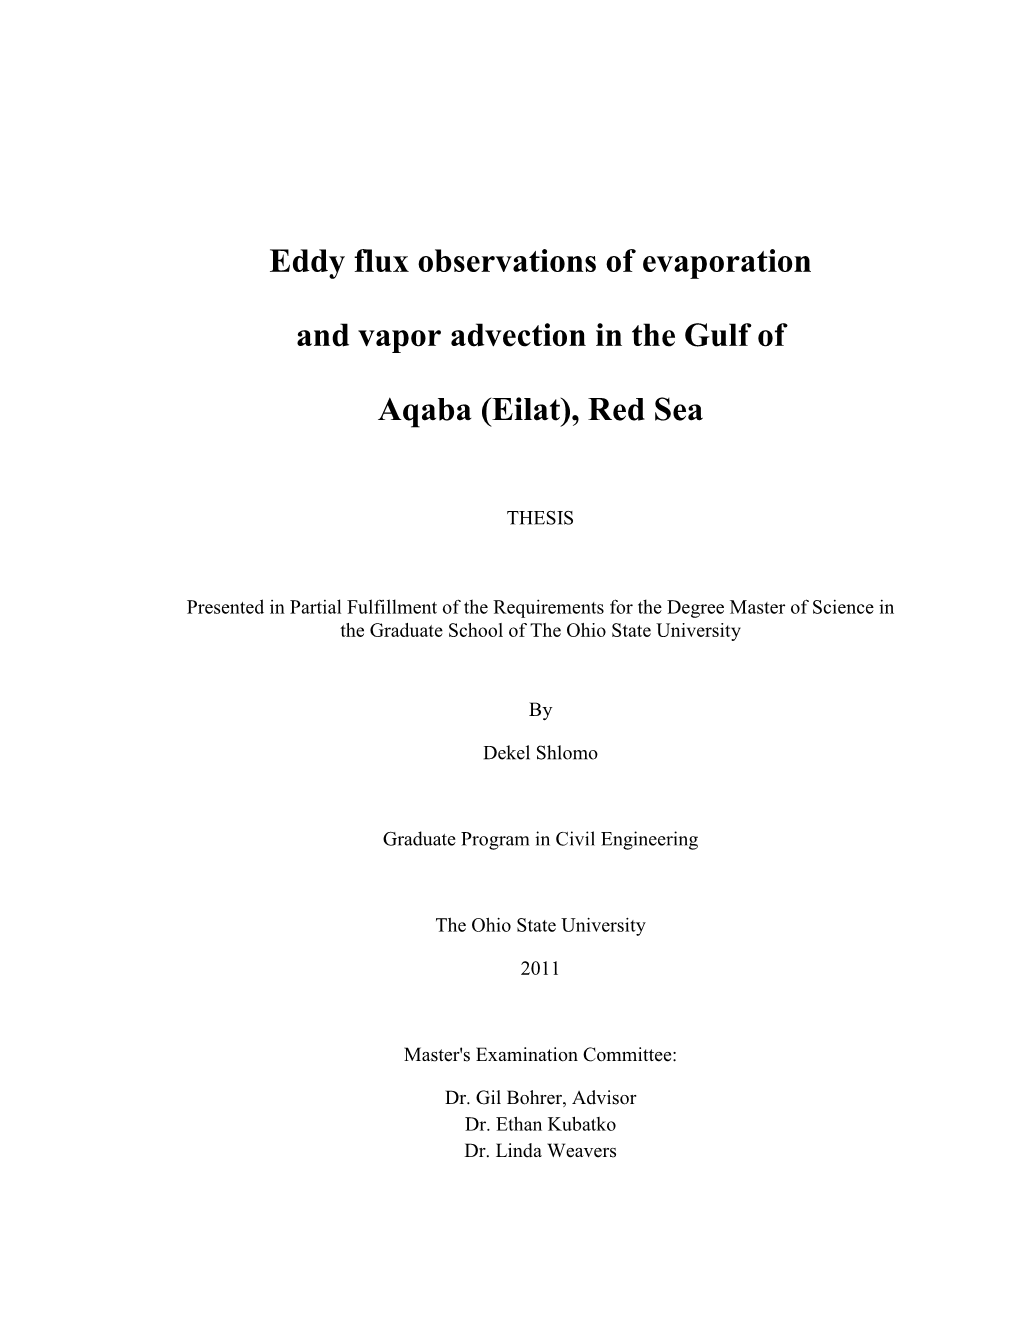 Eddy Flux Observations of Evaporation and Vapor